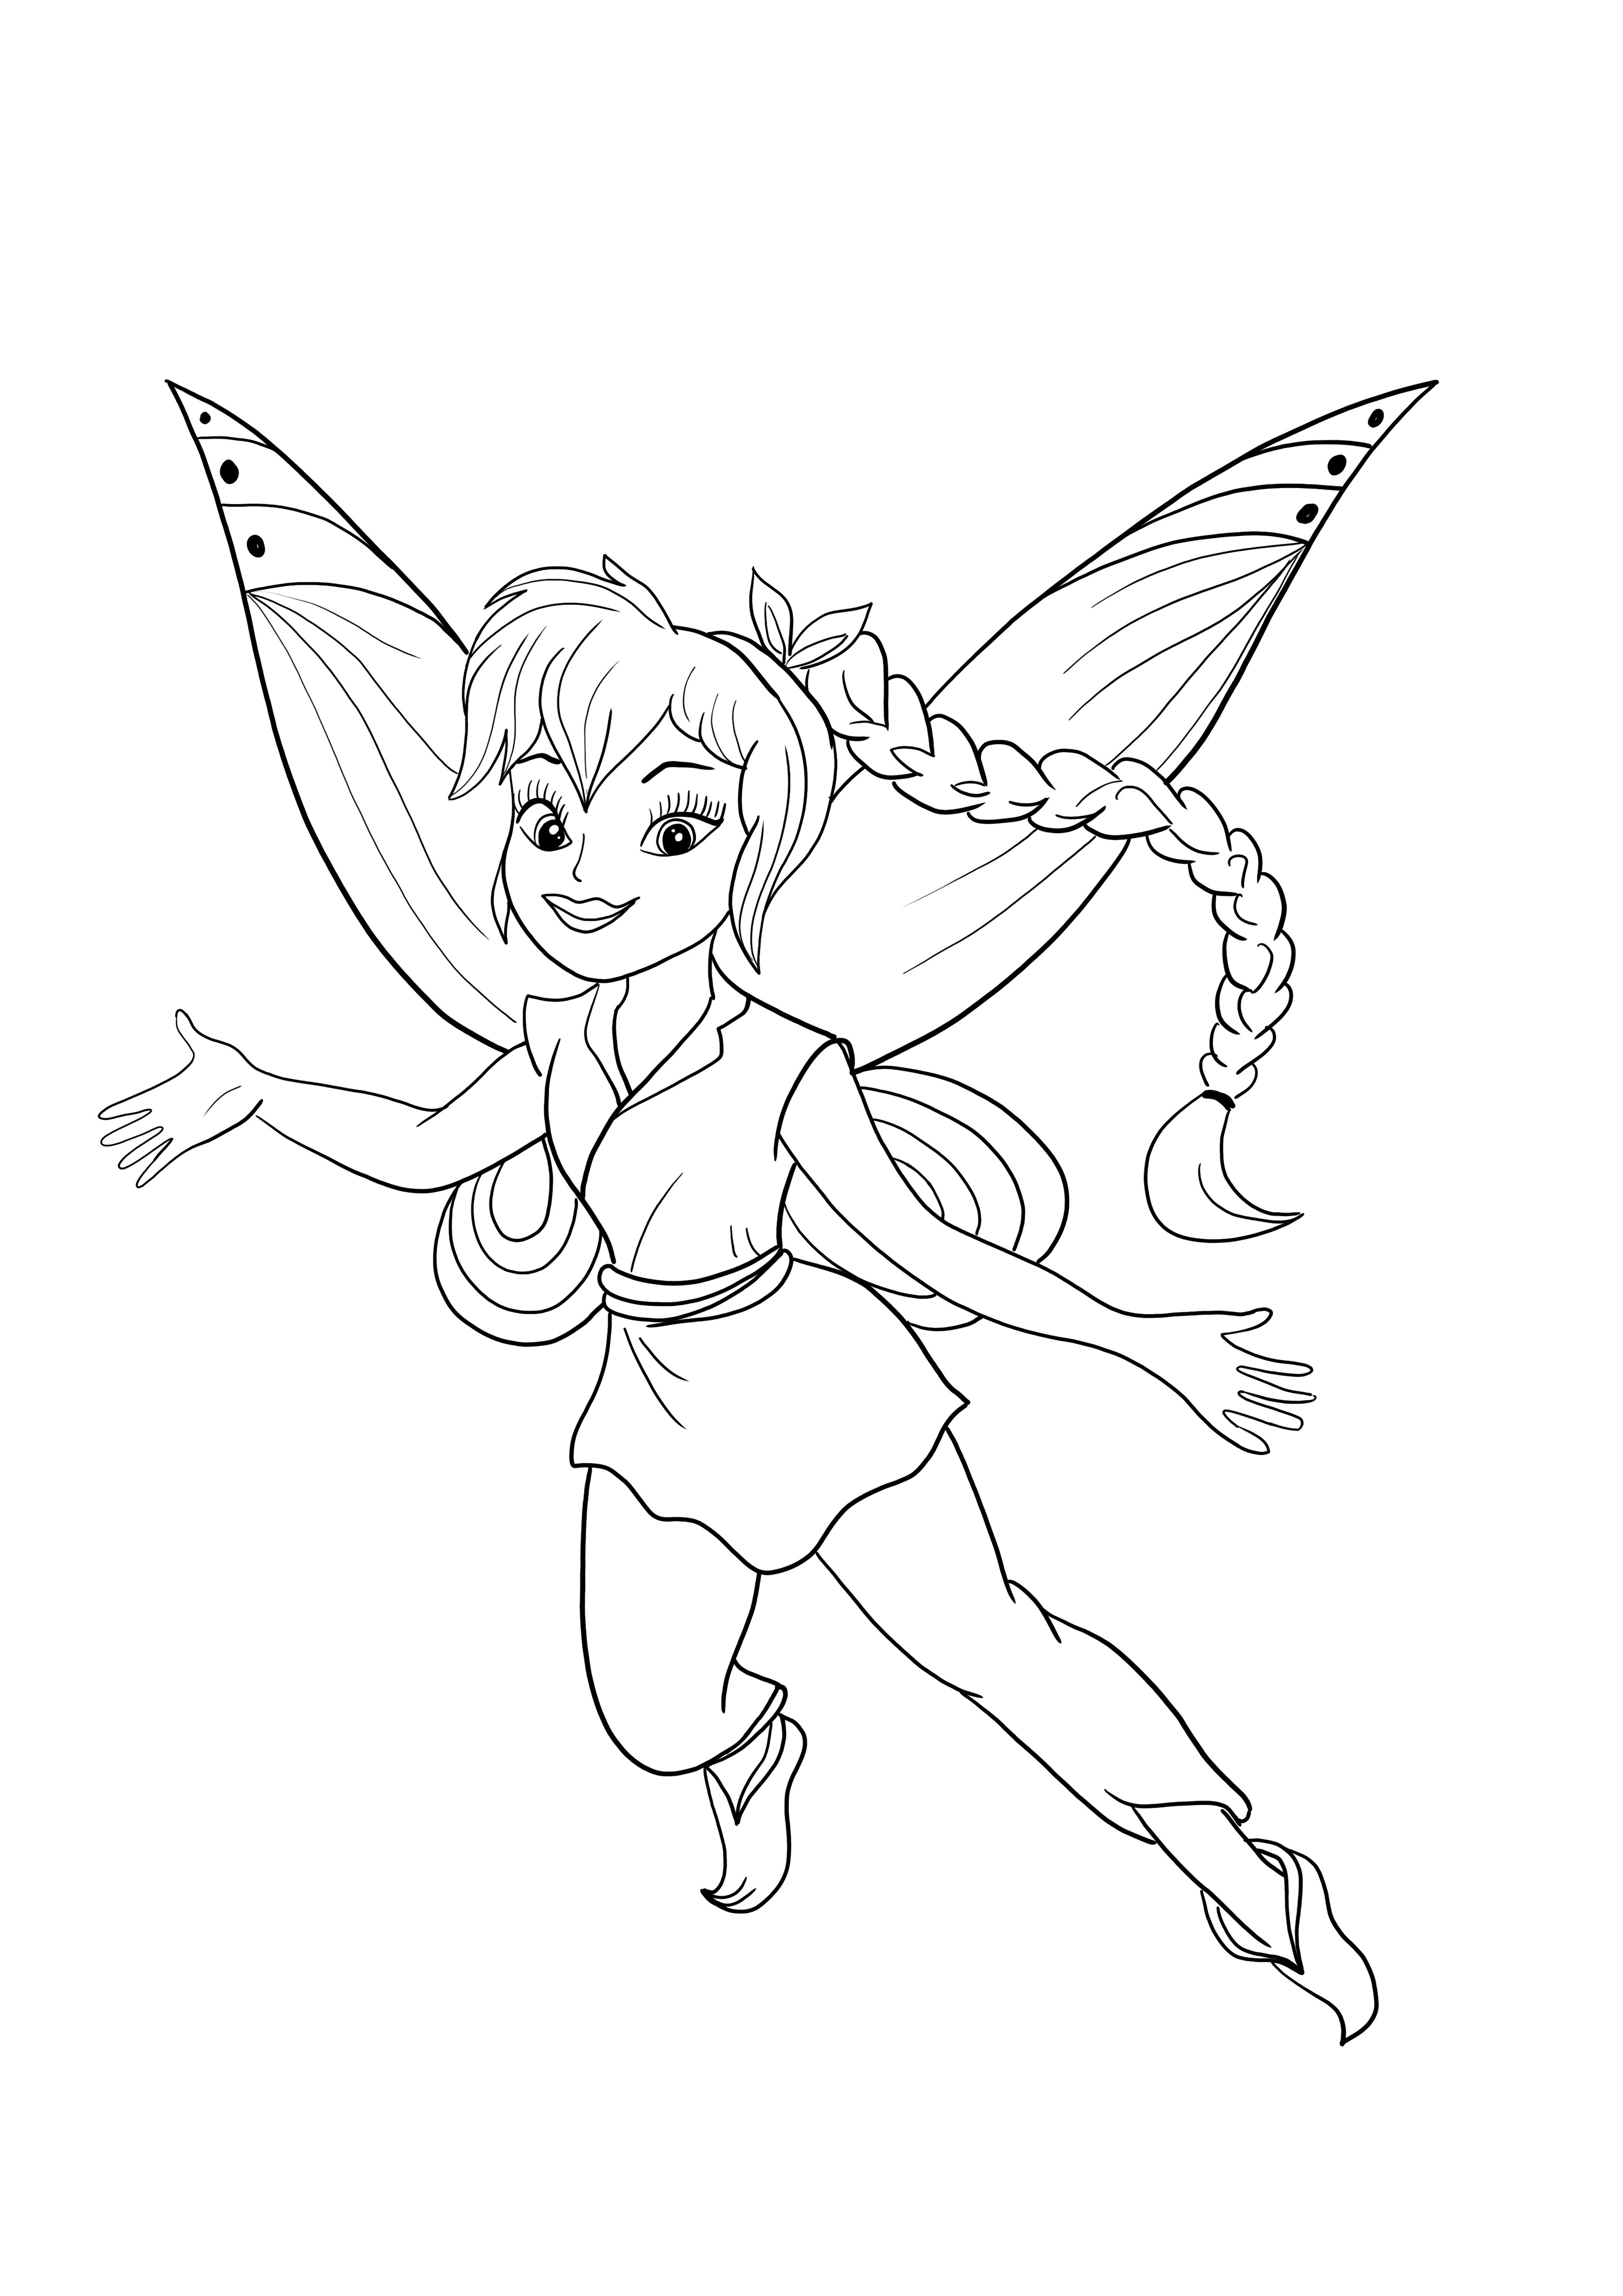 Fawn Disney fairy untuk mencetak secara gratis